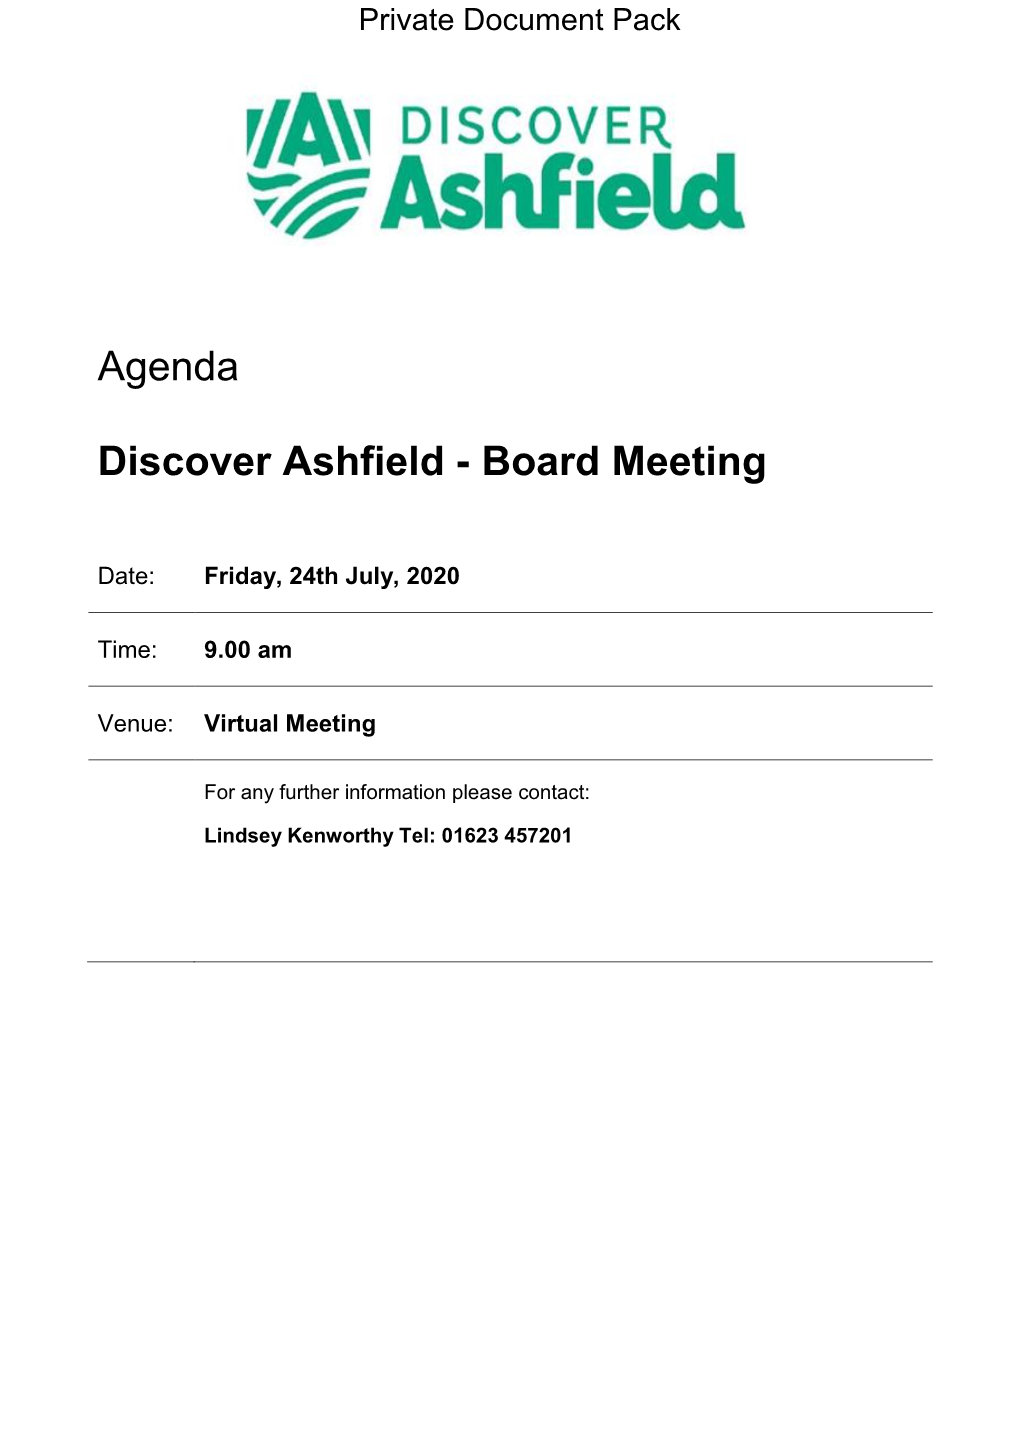 (Private Pack)Agenda Document for Discover Ashfield